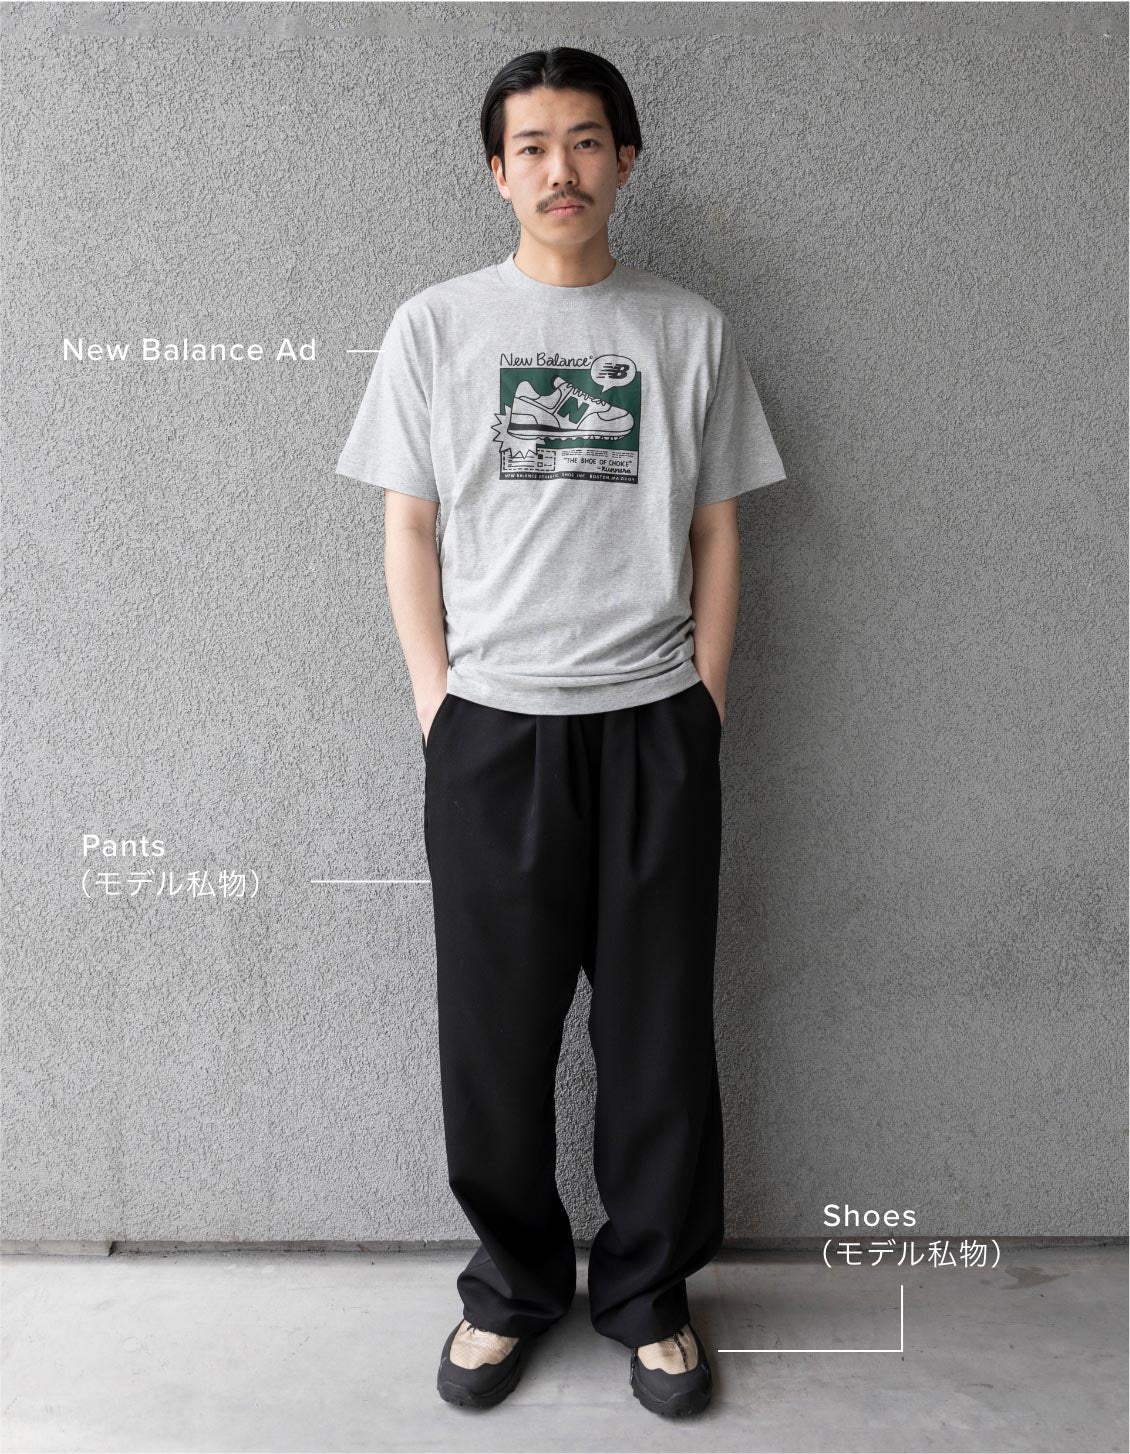 Ryo Ishikawa 코디네이터 상세 T셔츠:New Balance Ad, Pants:모델 사물, Shoes:모델 사물